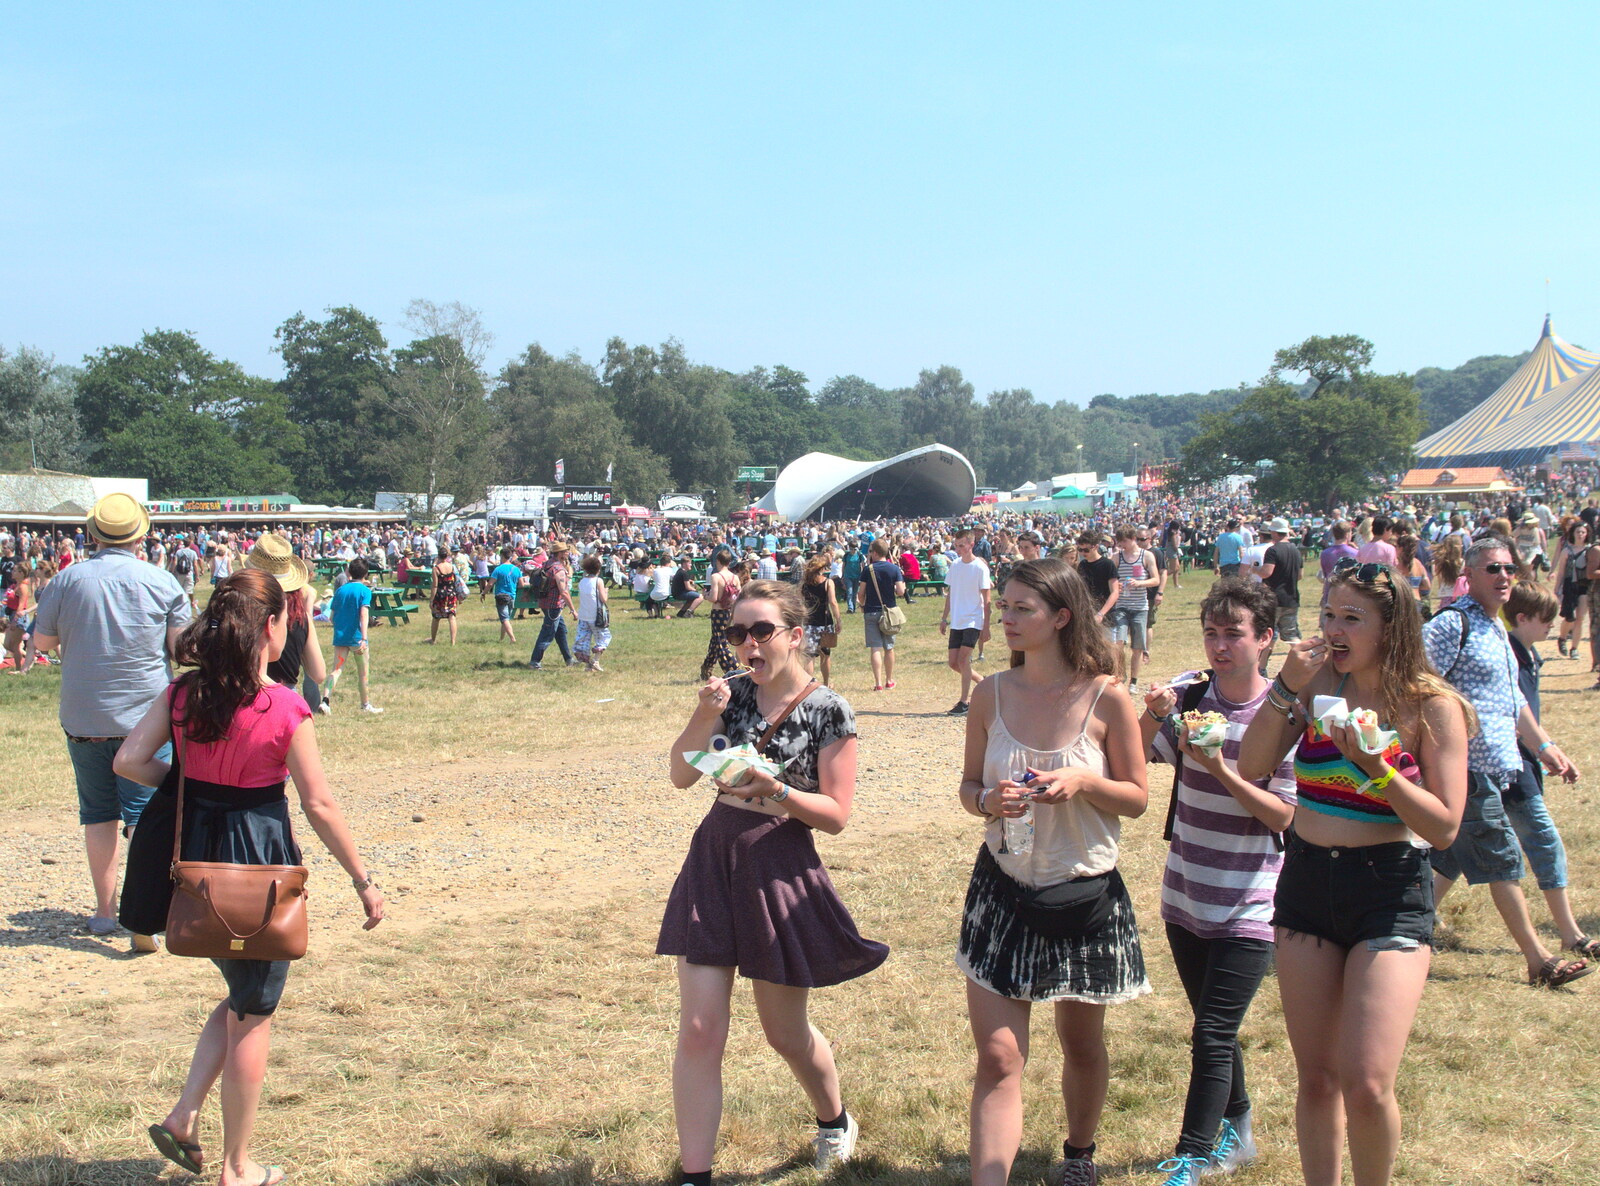 Festival crowds from Latitude Festival, Henham Park, Southwold, Suffolk - 17th July 2014